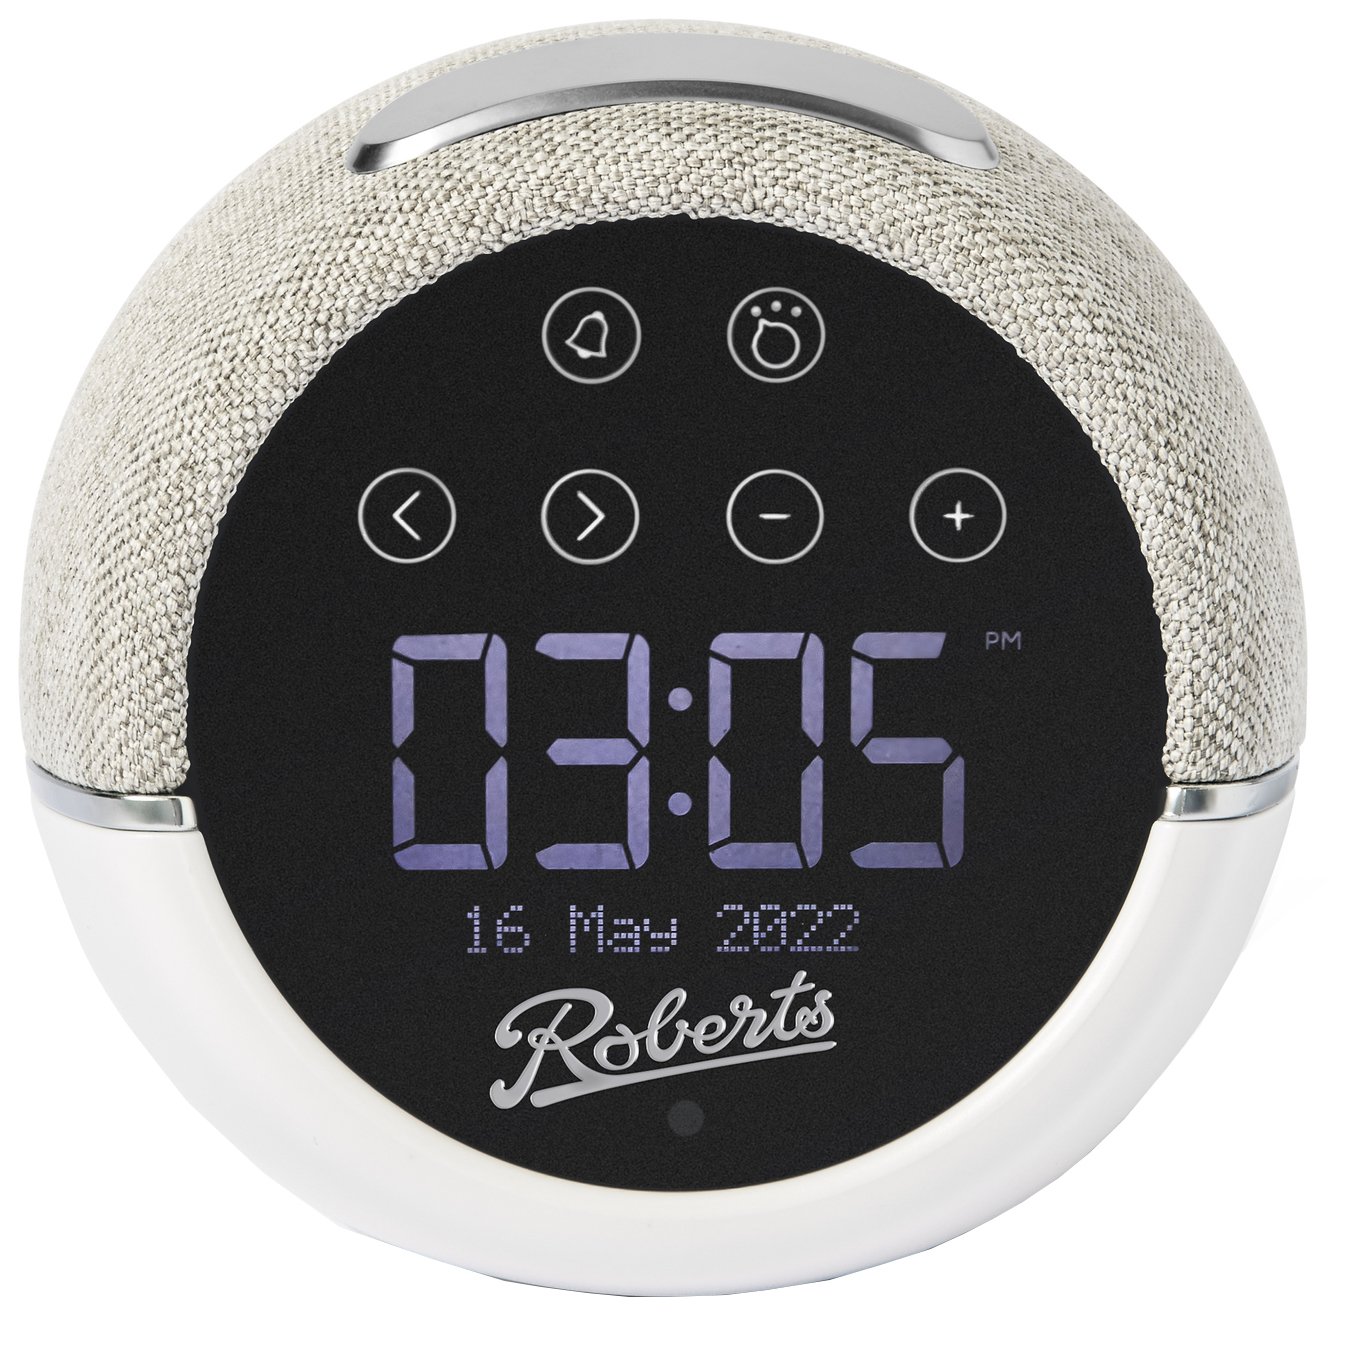 Roberts Zen Plus Dab  Digital Alarm Clock Radio - White